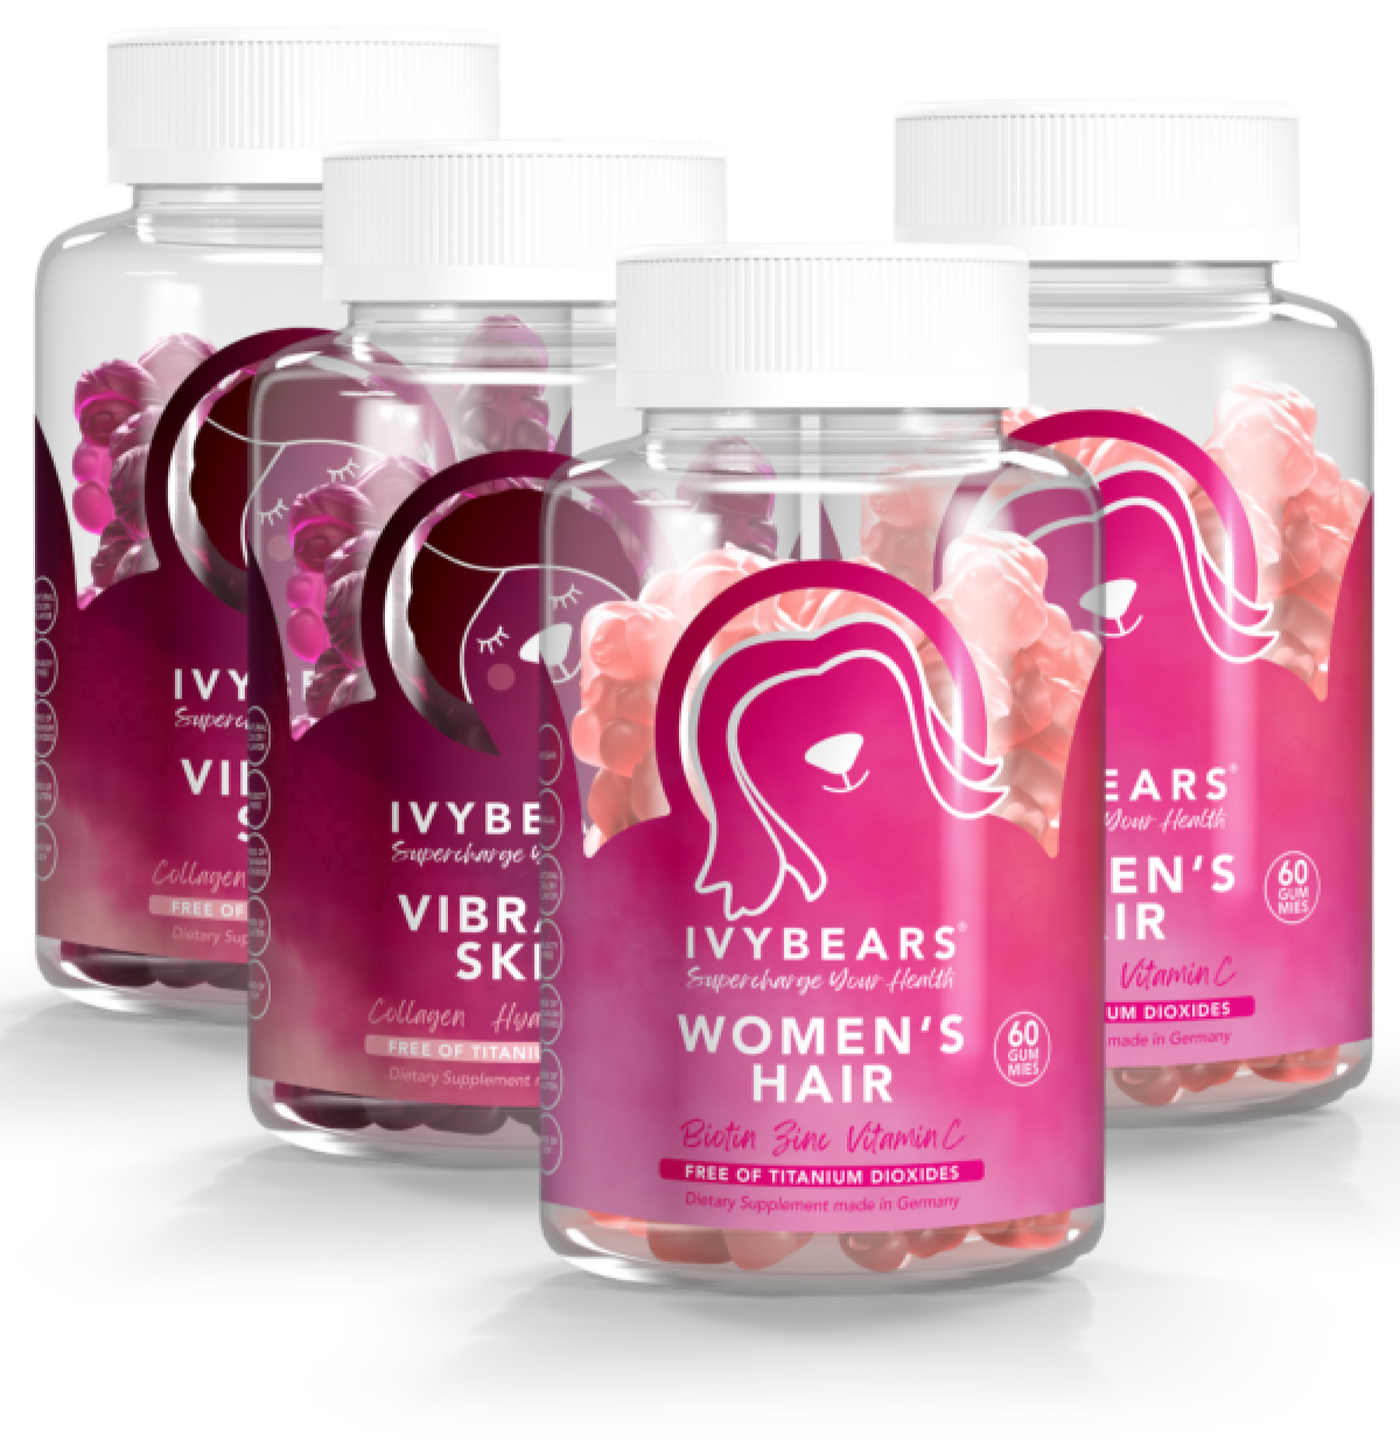 Vibrant Skin & Women’s Hair Vitamins